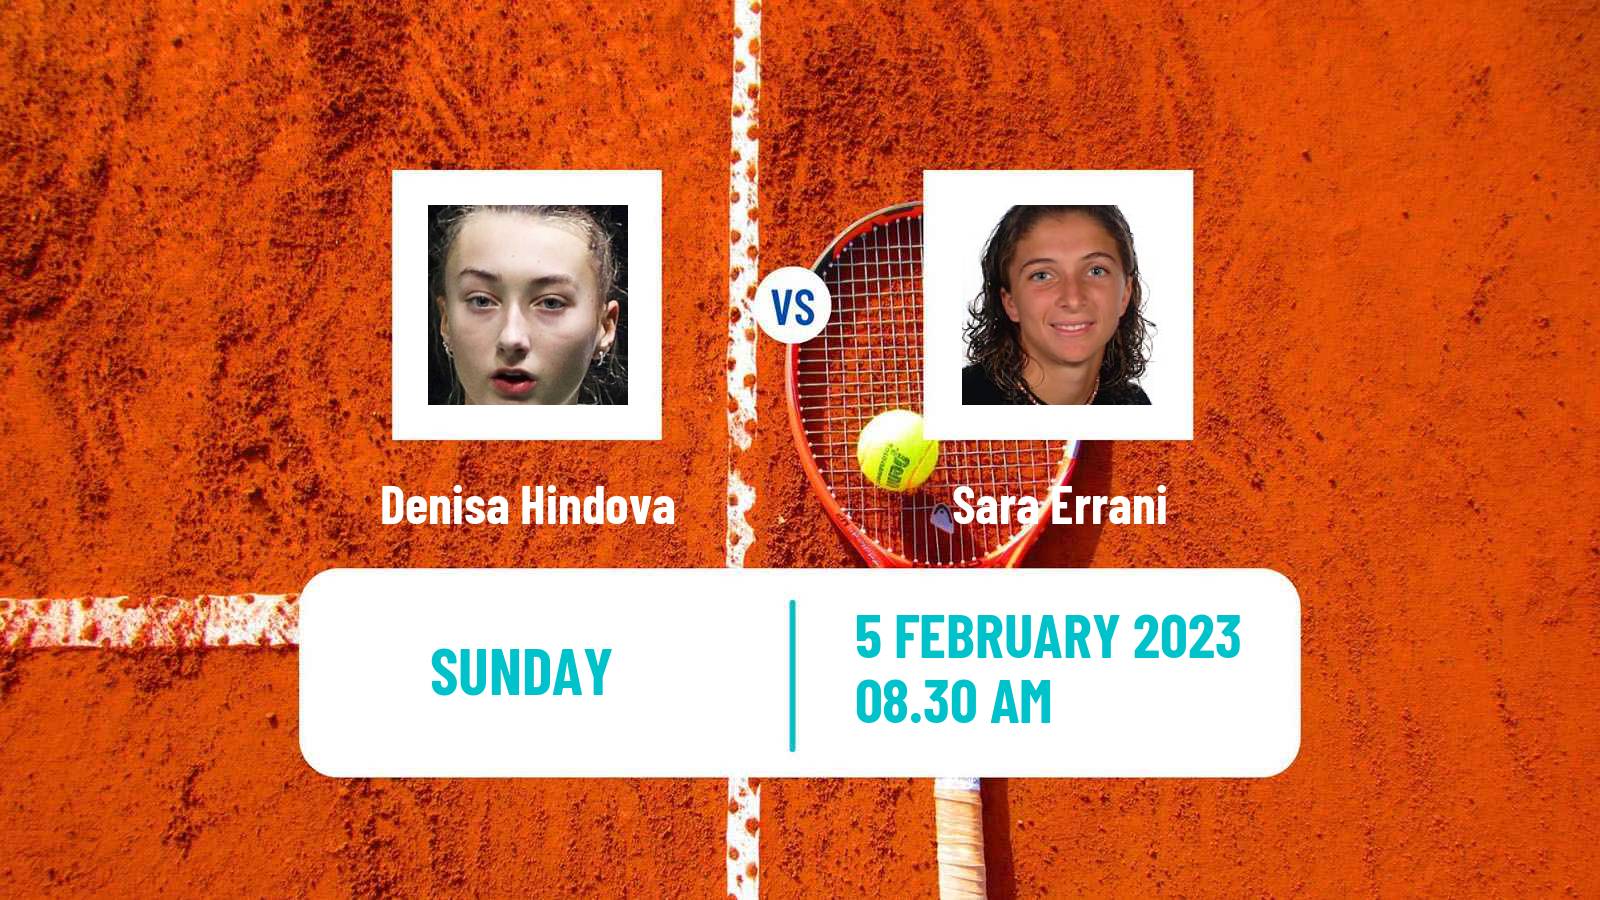 Tennis WTA Linz Denisa Hindova - Sara Errani